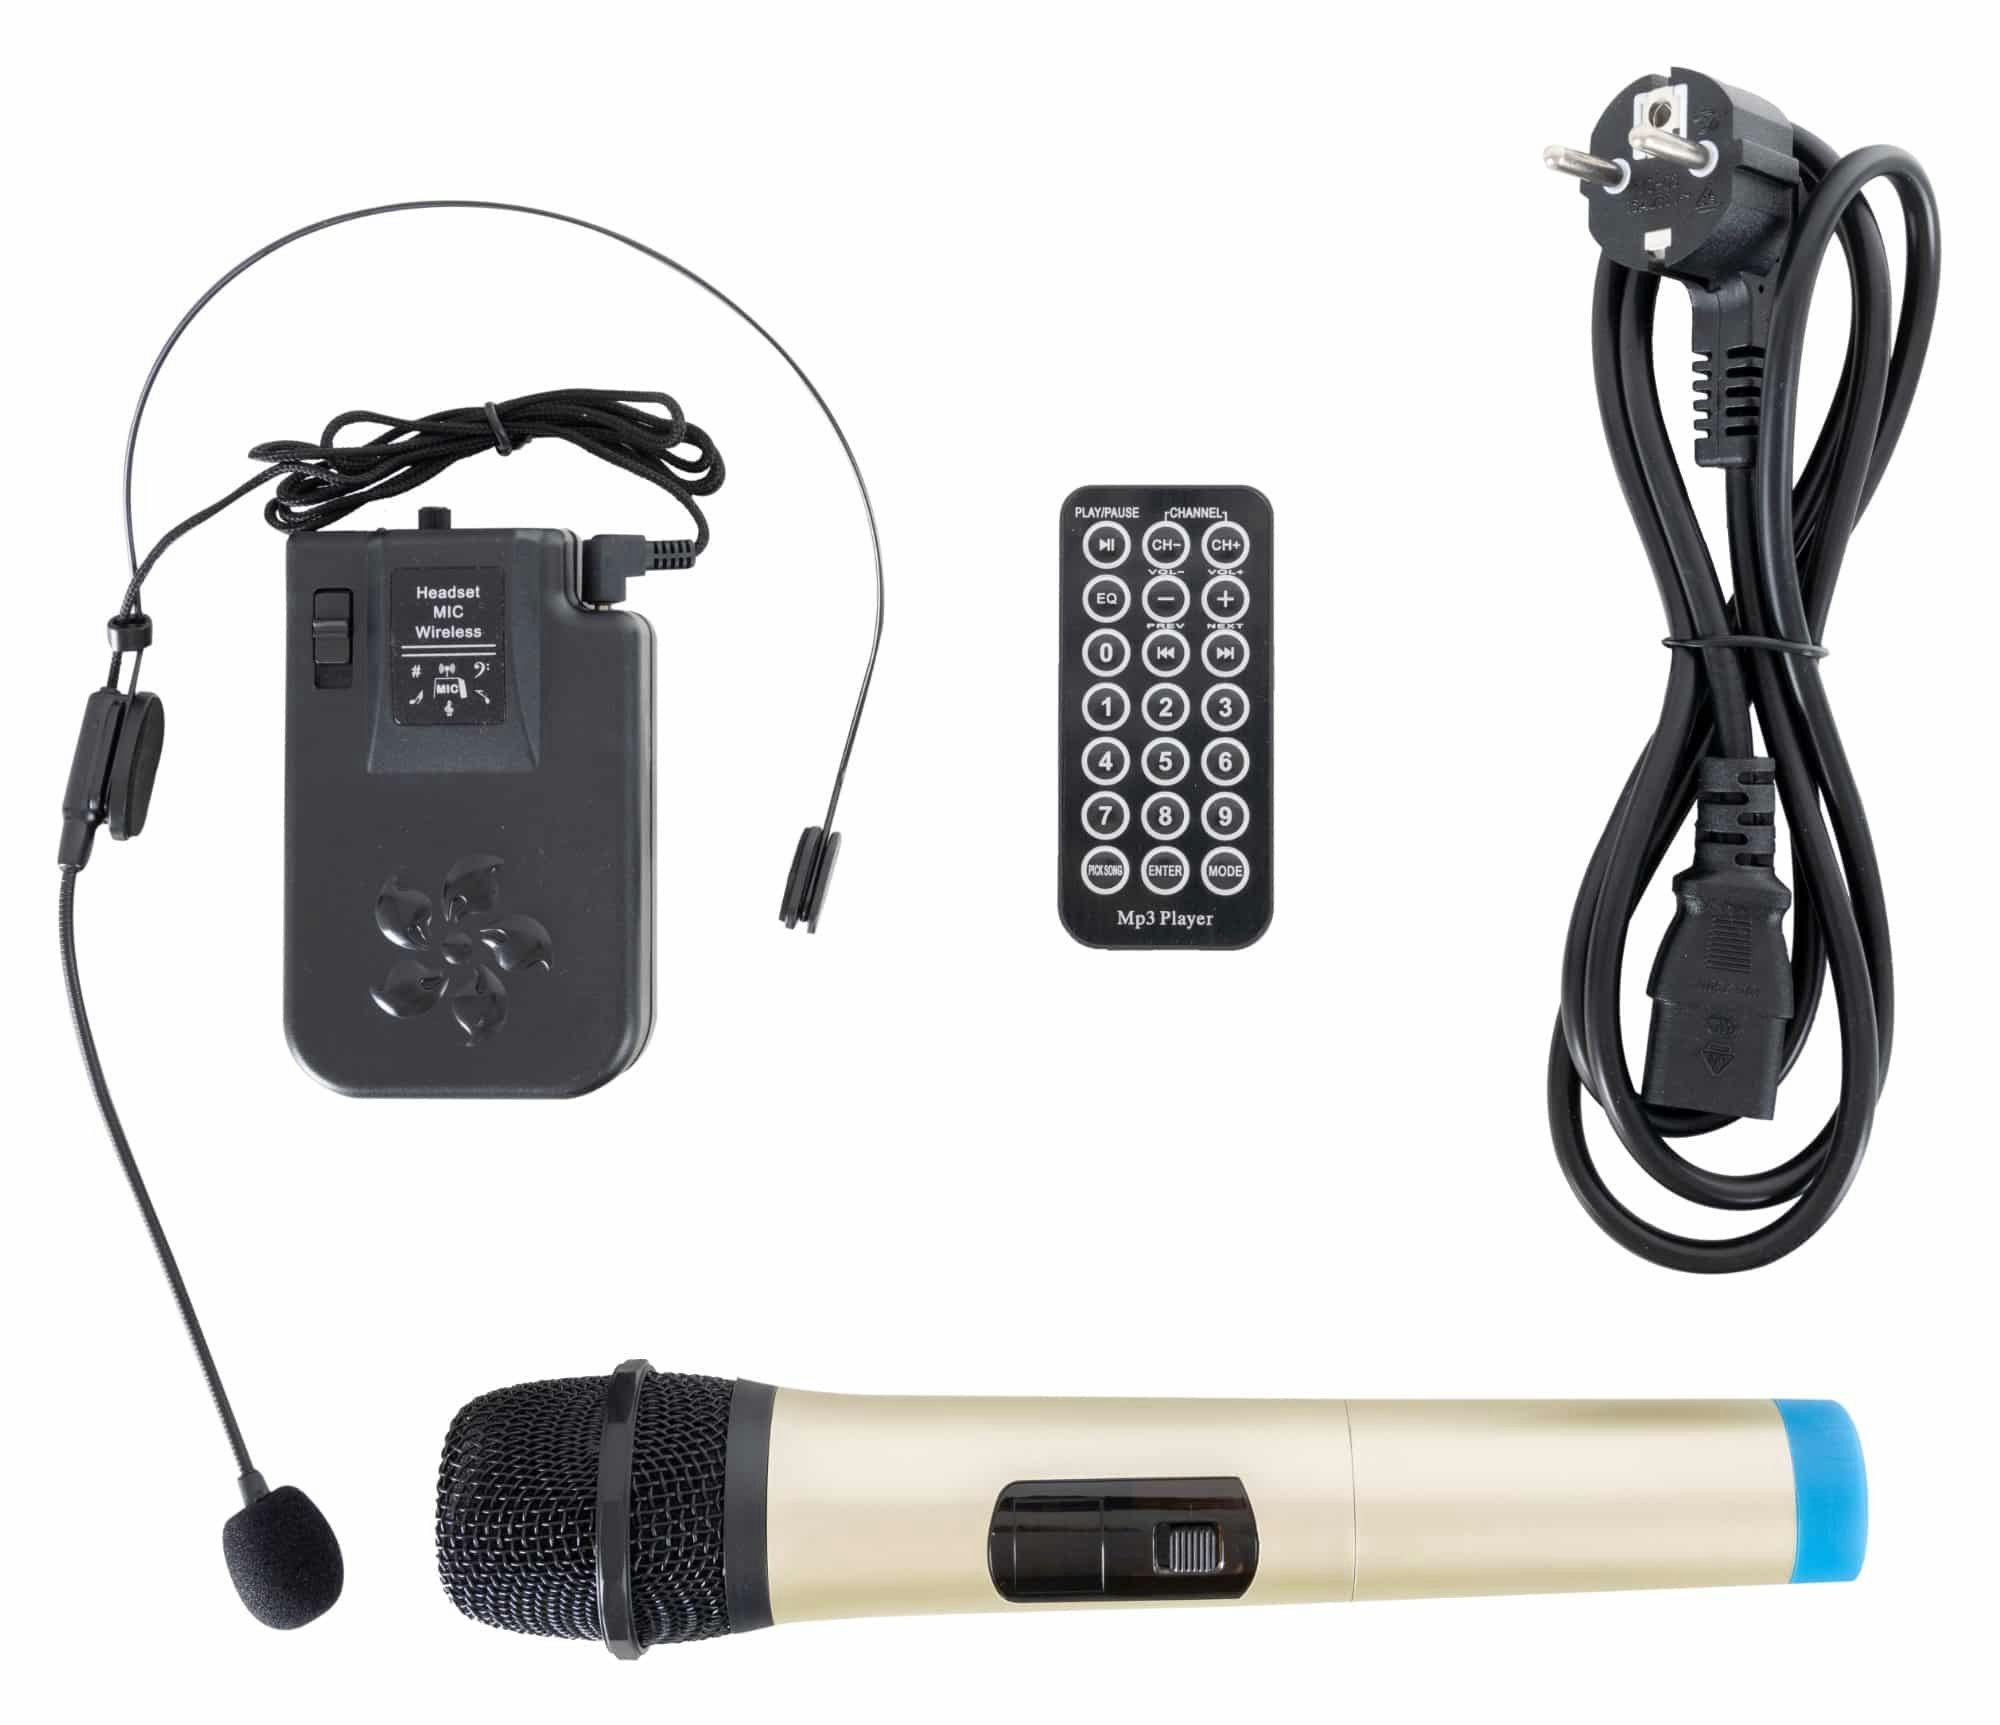 30 Headsets) mit inkl. TWS Pronomic MOVE Soundanalage Funkmikrofone - 12"-Woofer (Bluetooth-Schnittstelle, W, Stereo Lautsprecher 12MA-A Funktion Mobile Akku-Aktivbox &